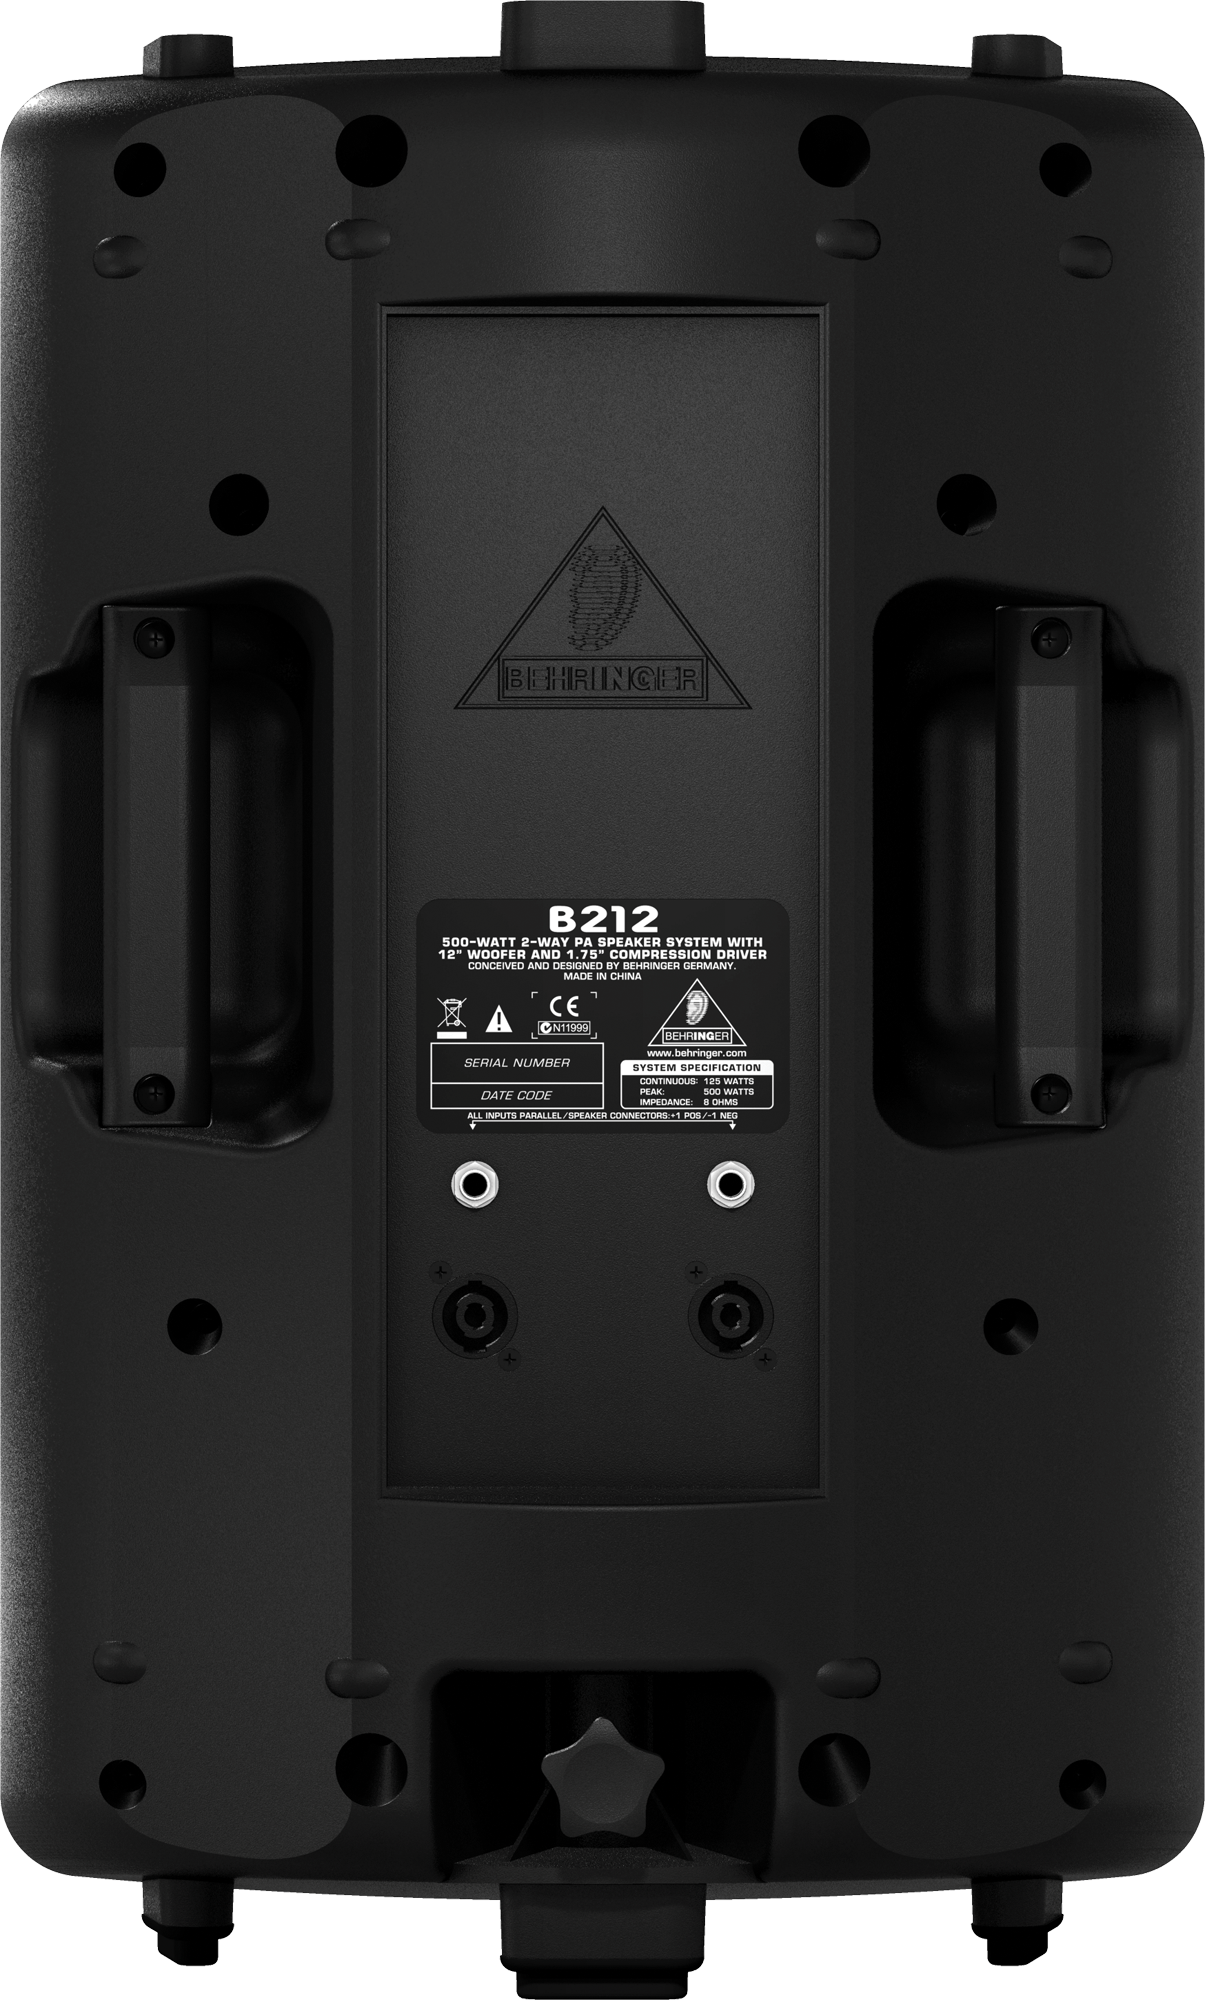 Audio Behringer Eurolive B2 Series PNG HD Quality